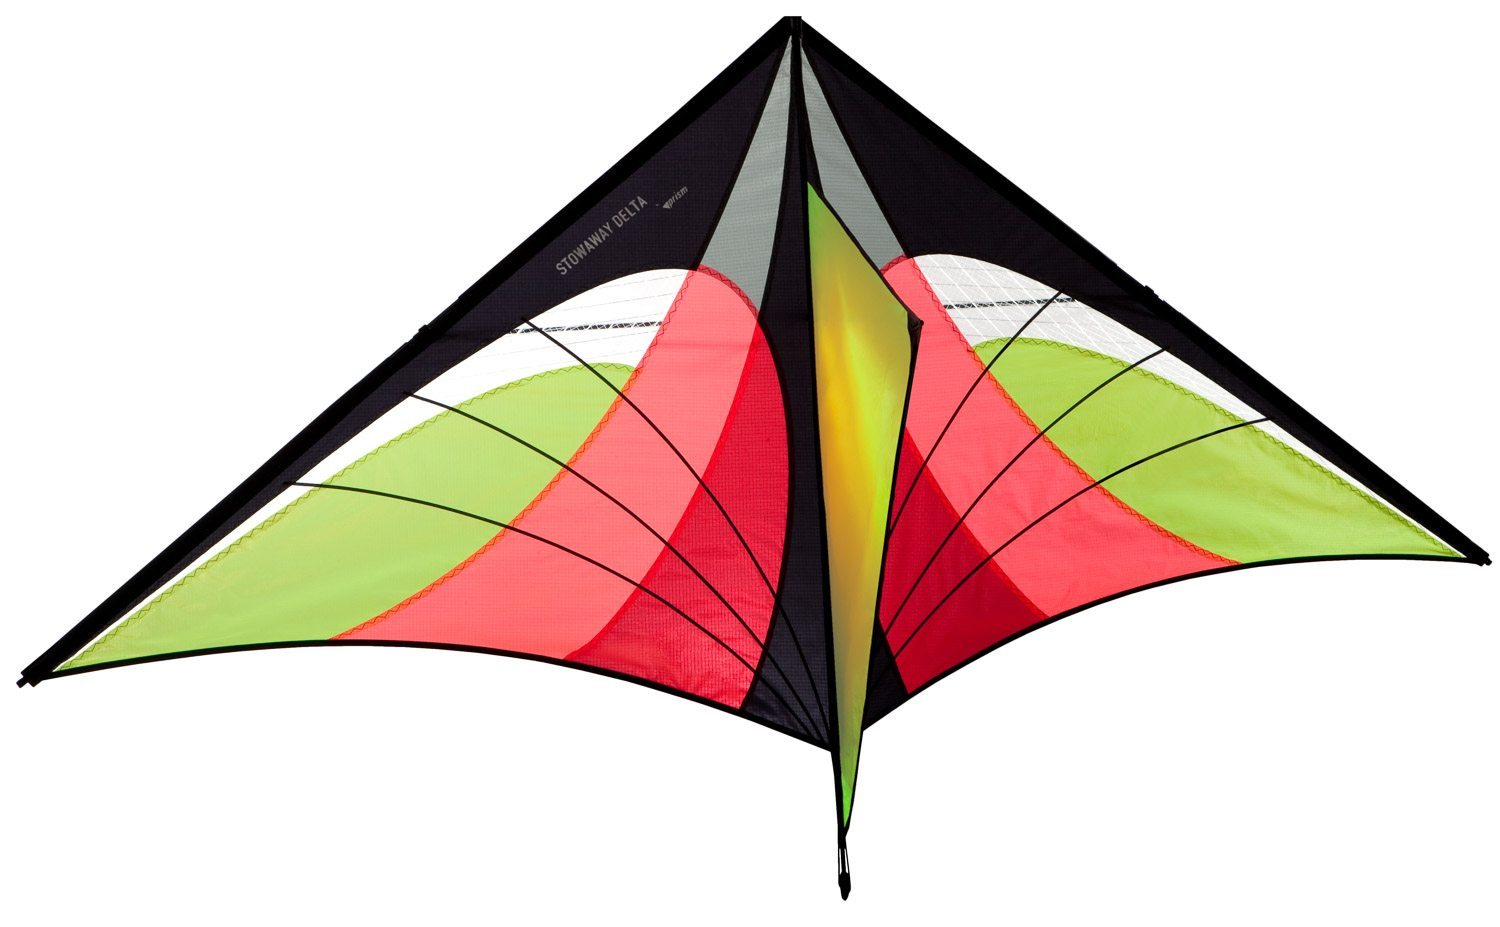 Stowaway Delta | Prism Kite Technology